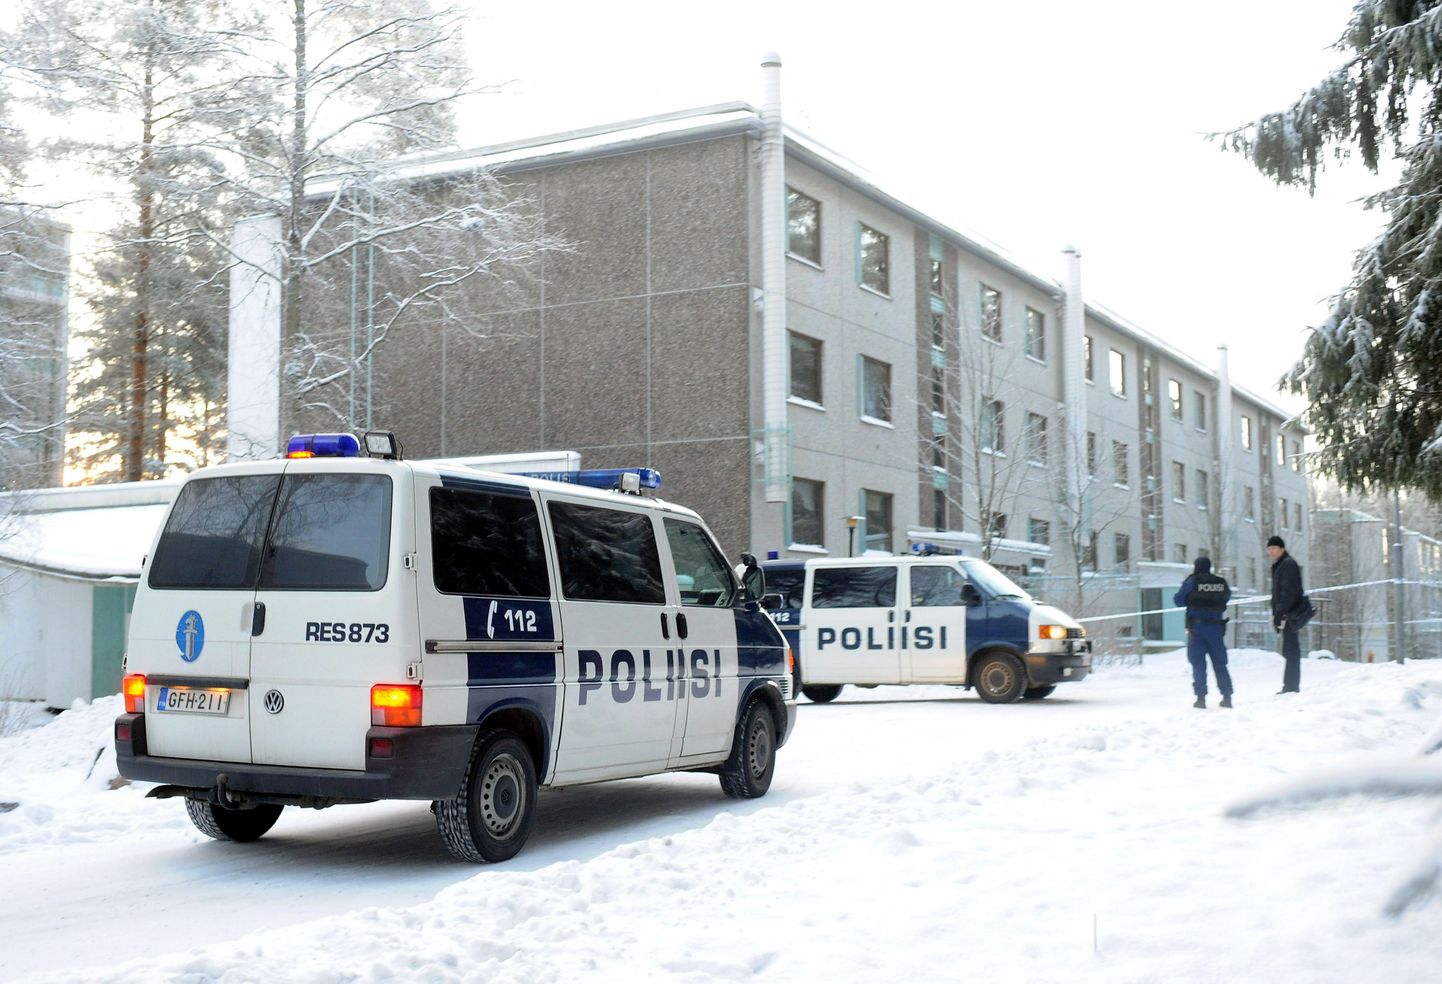 Soome politsei autod.